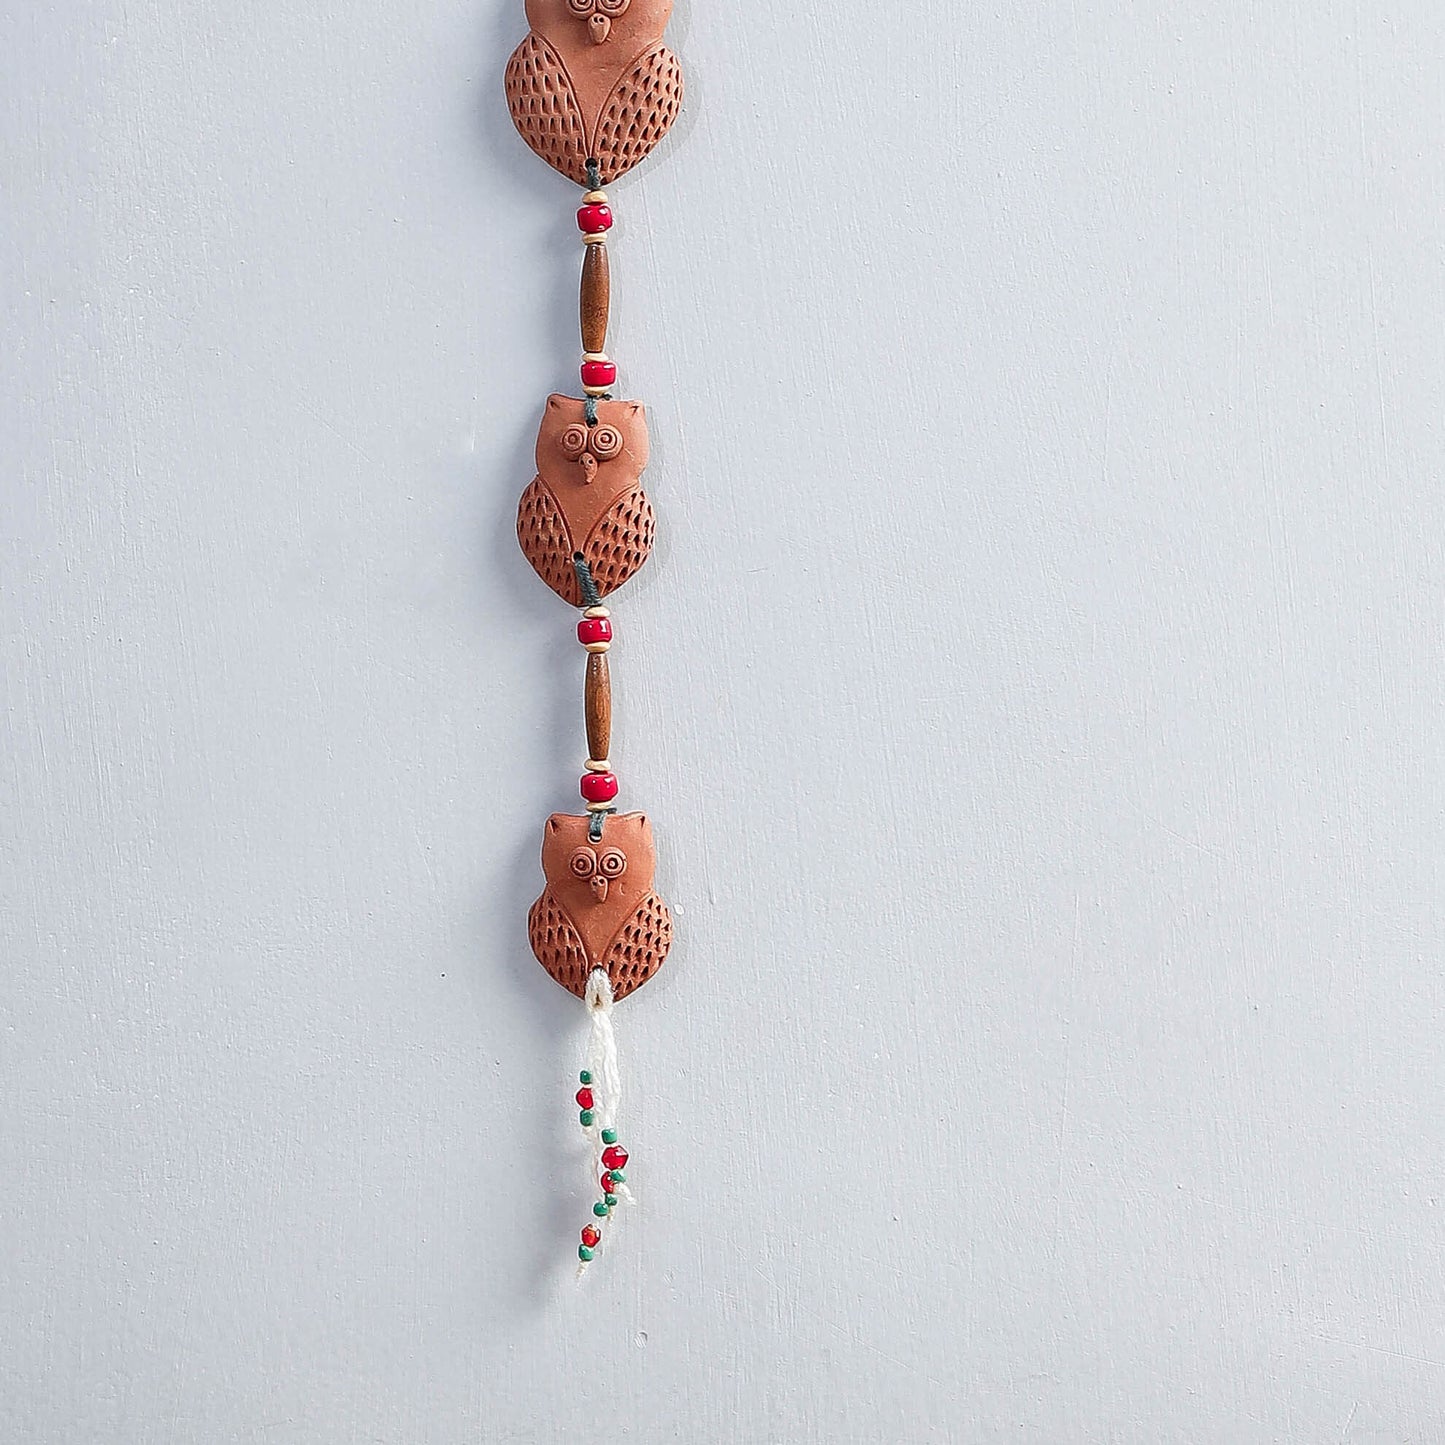 Terracotta Clay Handmade Wall Hanging